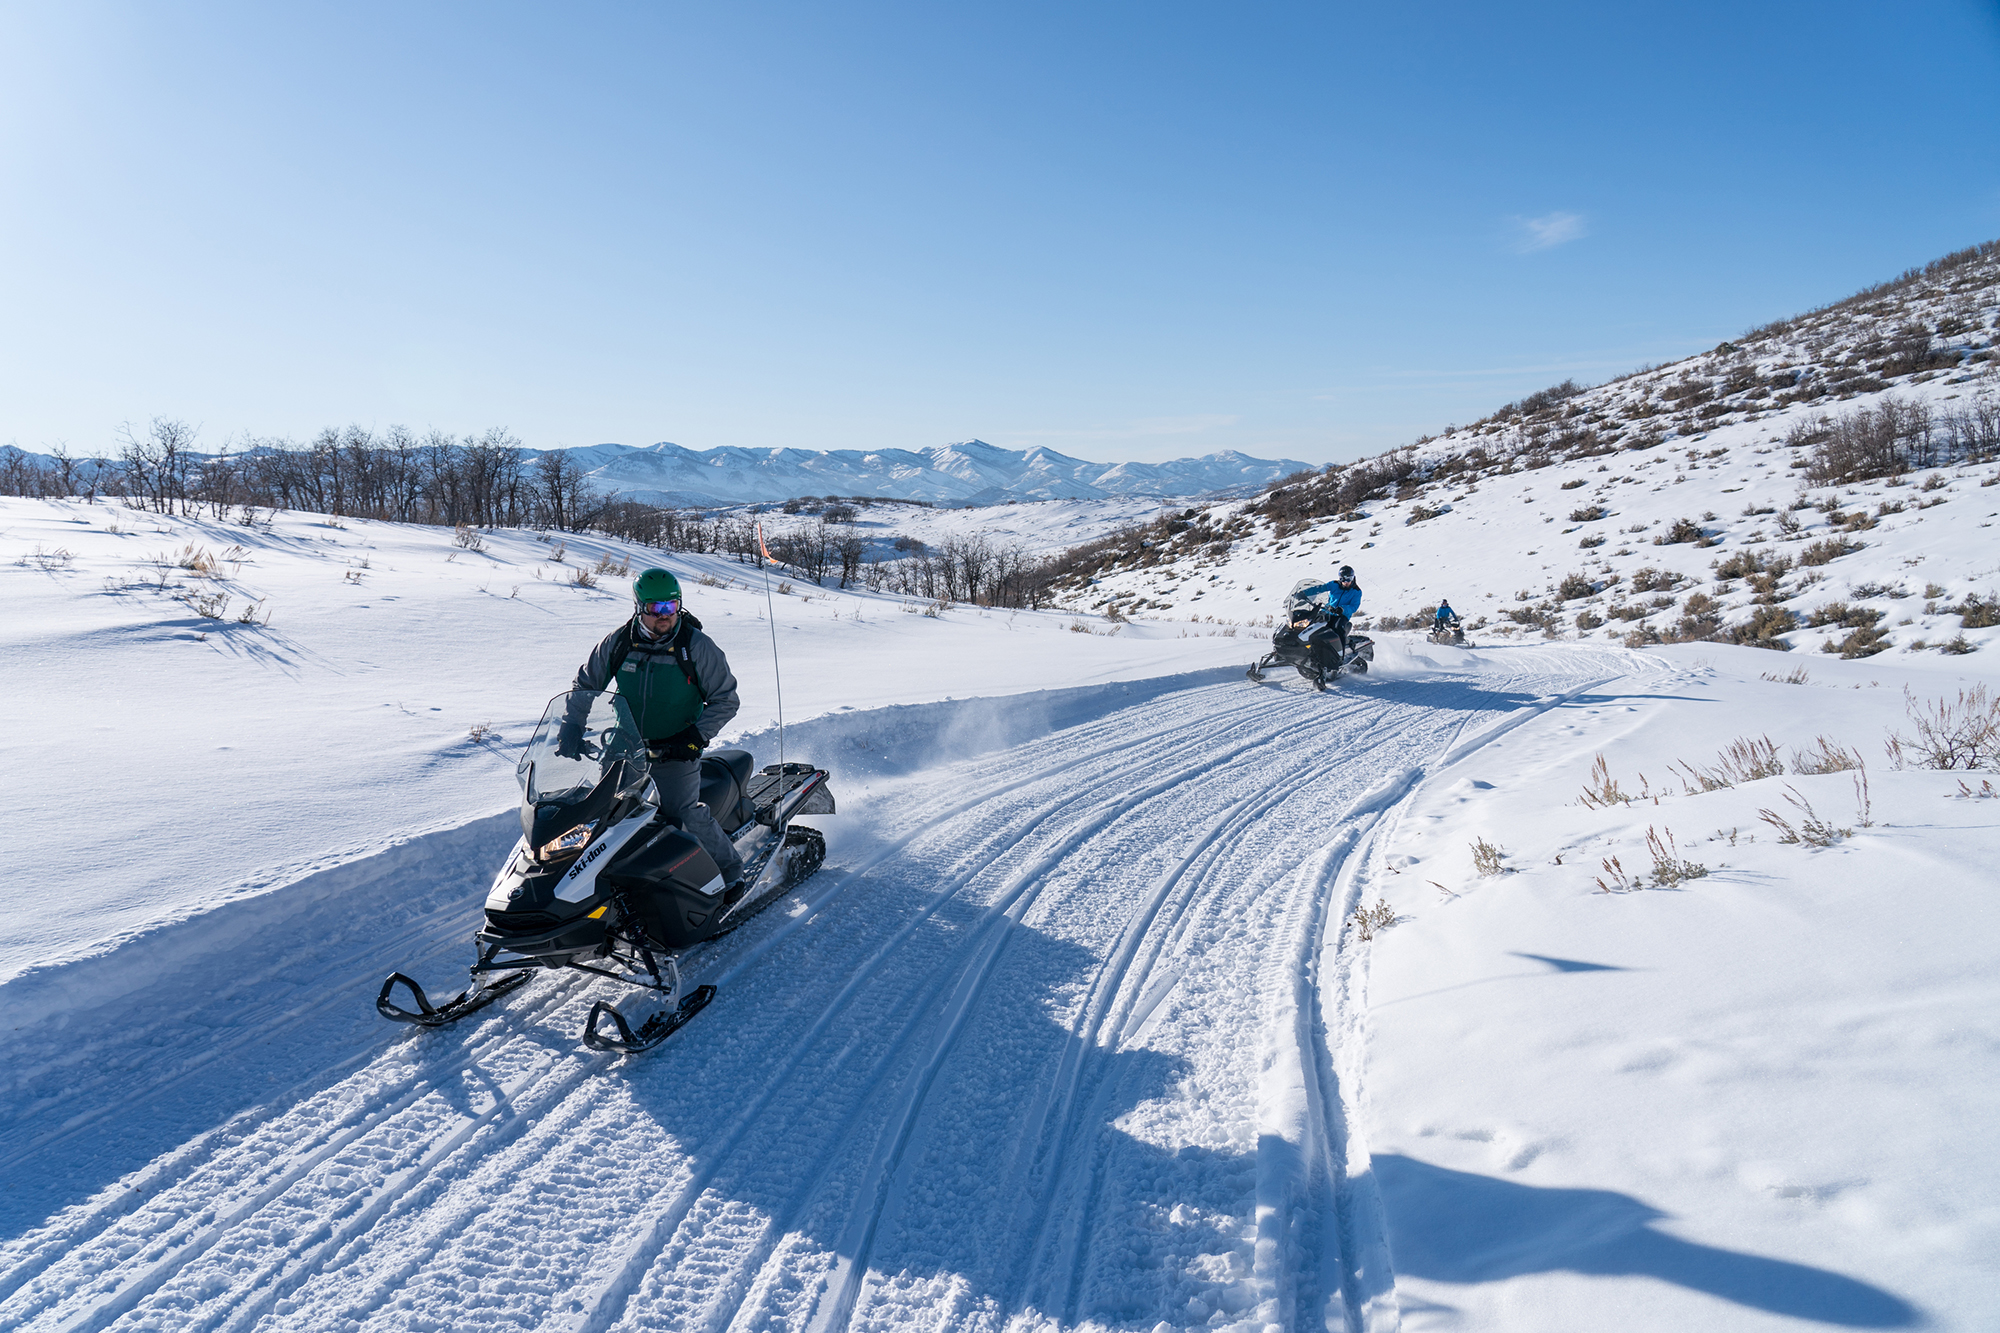 guided snowmobile tours utah